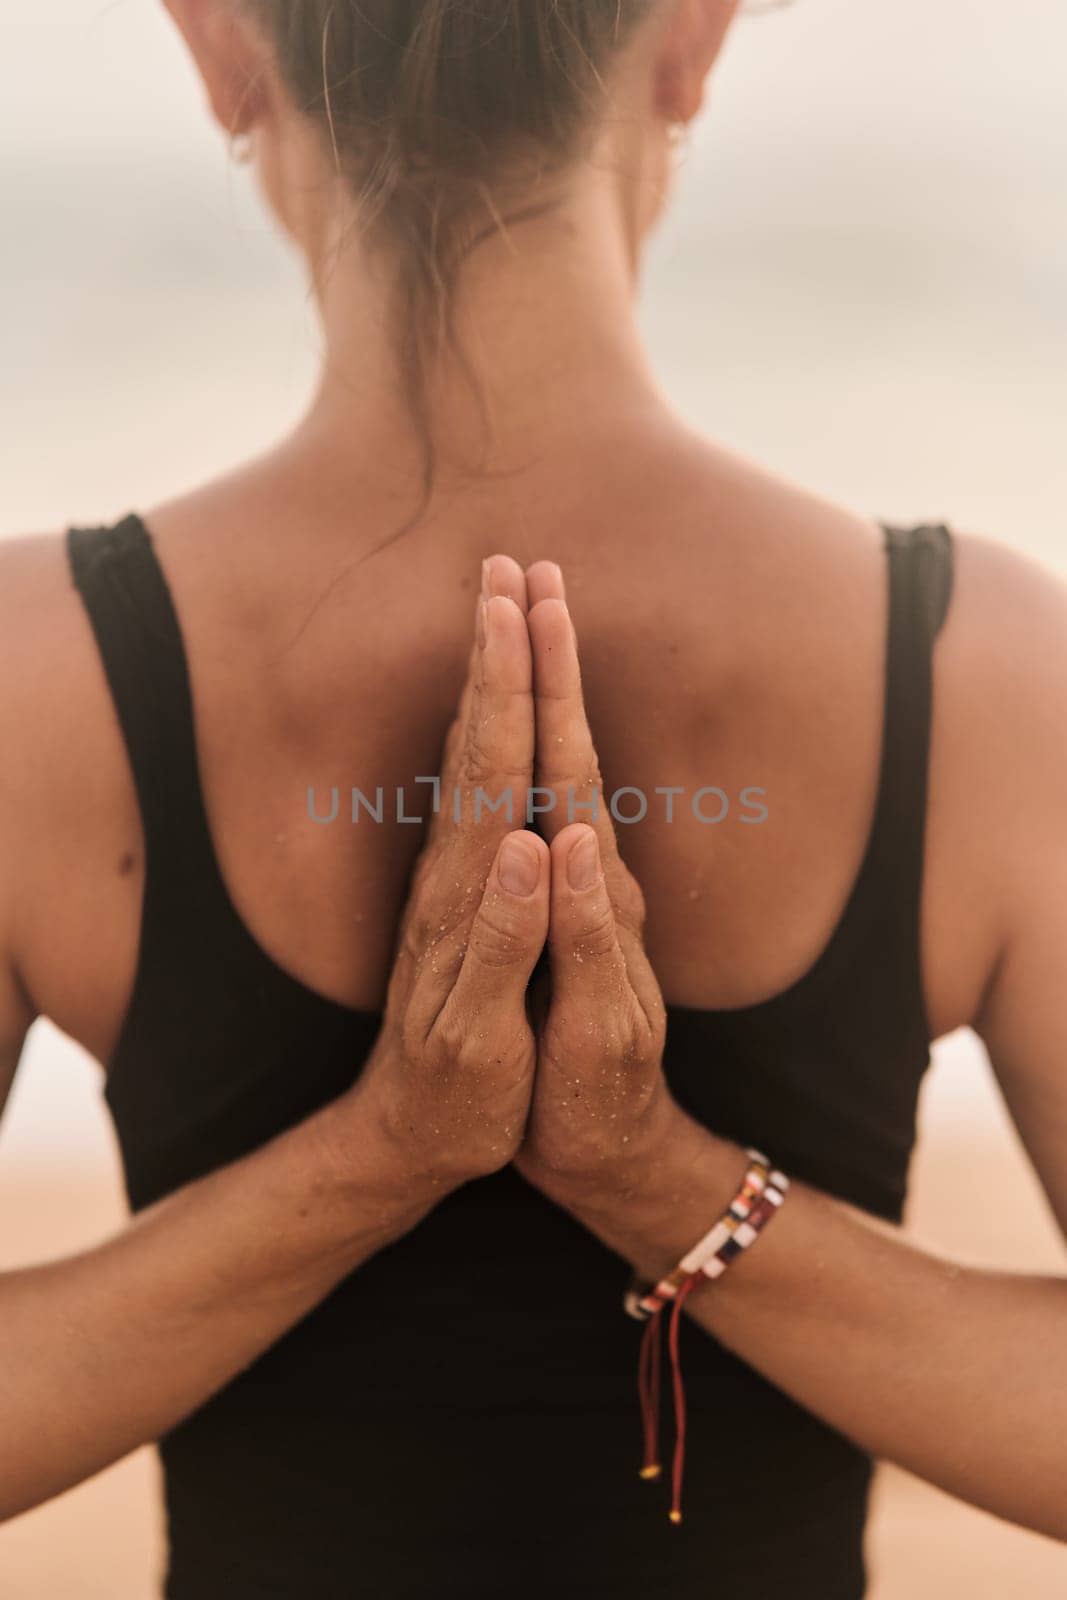 Beautiful girl doing yoga at the beach. High quality photo